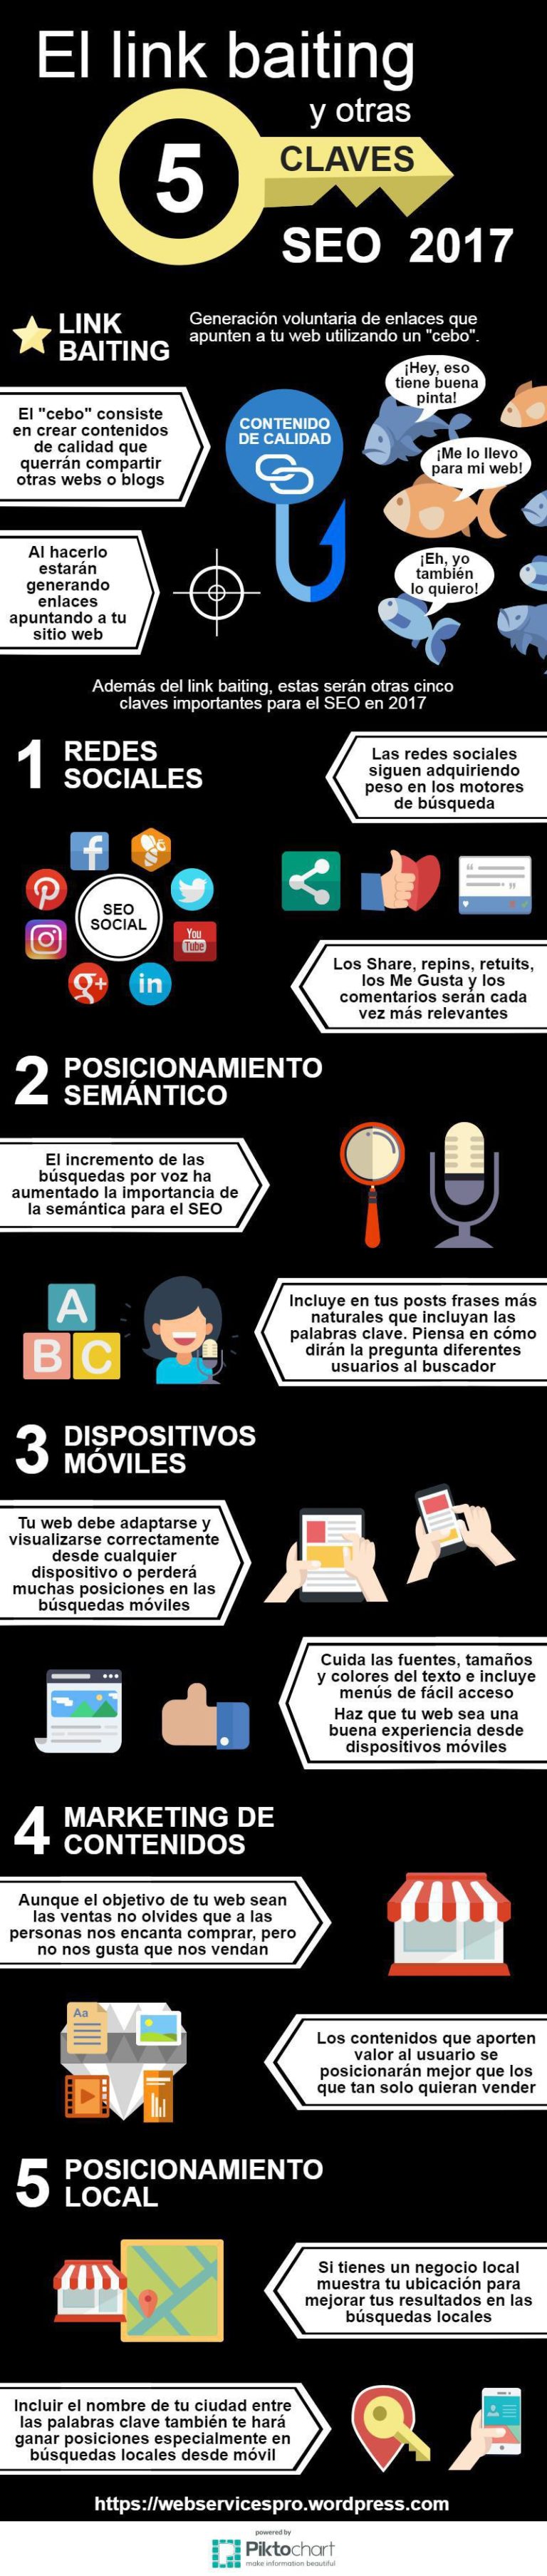 Tendencias de posicionamiento en buscadores SEO 2017 Infografia en espanol